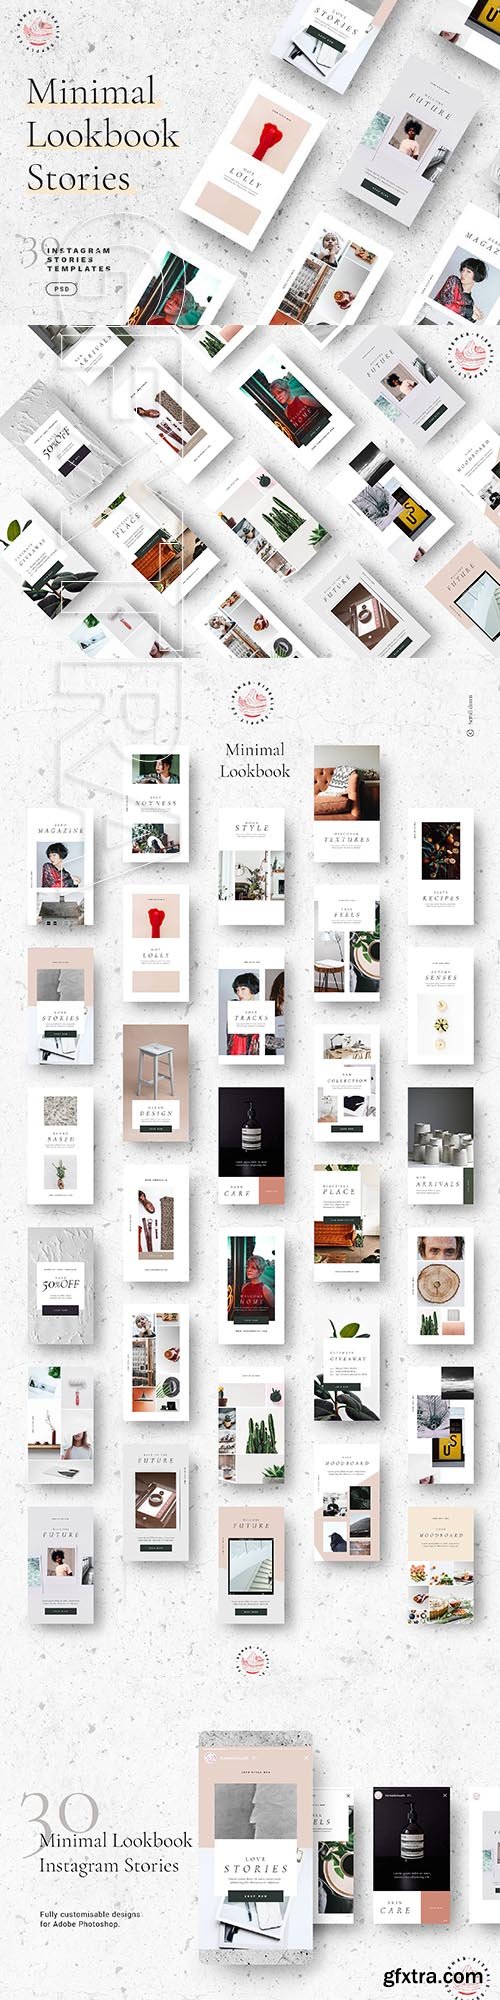 CreativeMarket - Minimal Lookbook Instagram Stories 3089591